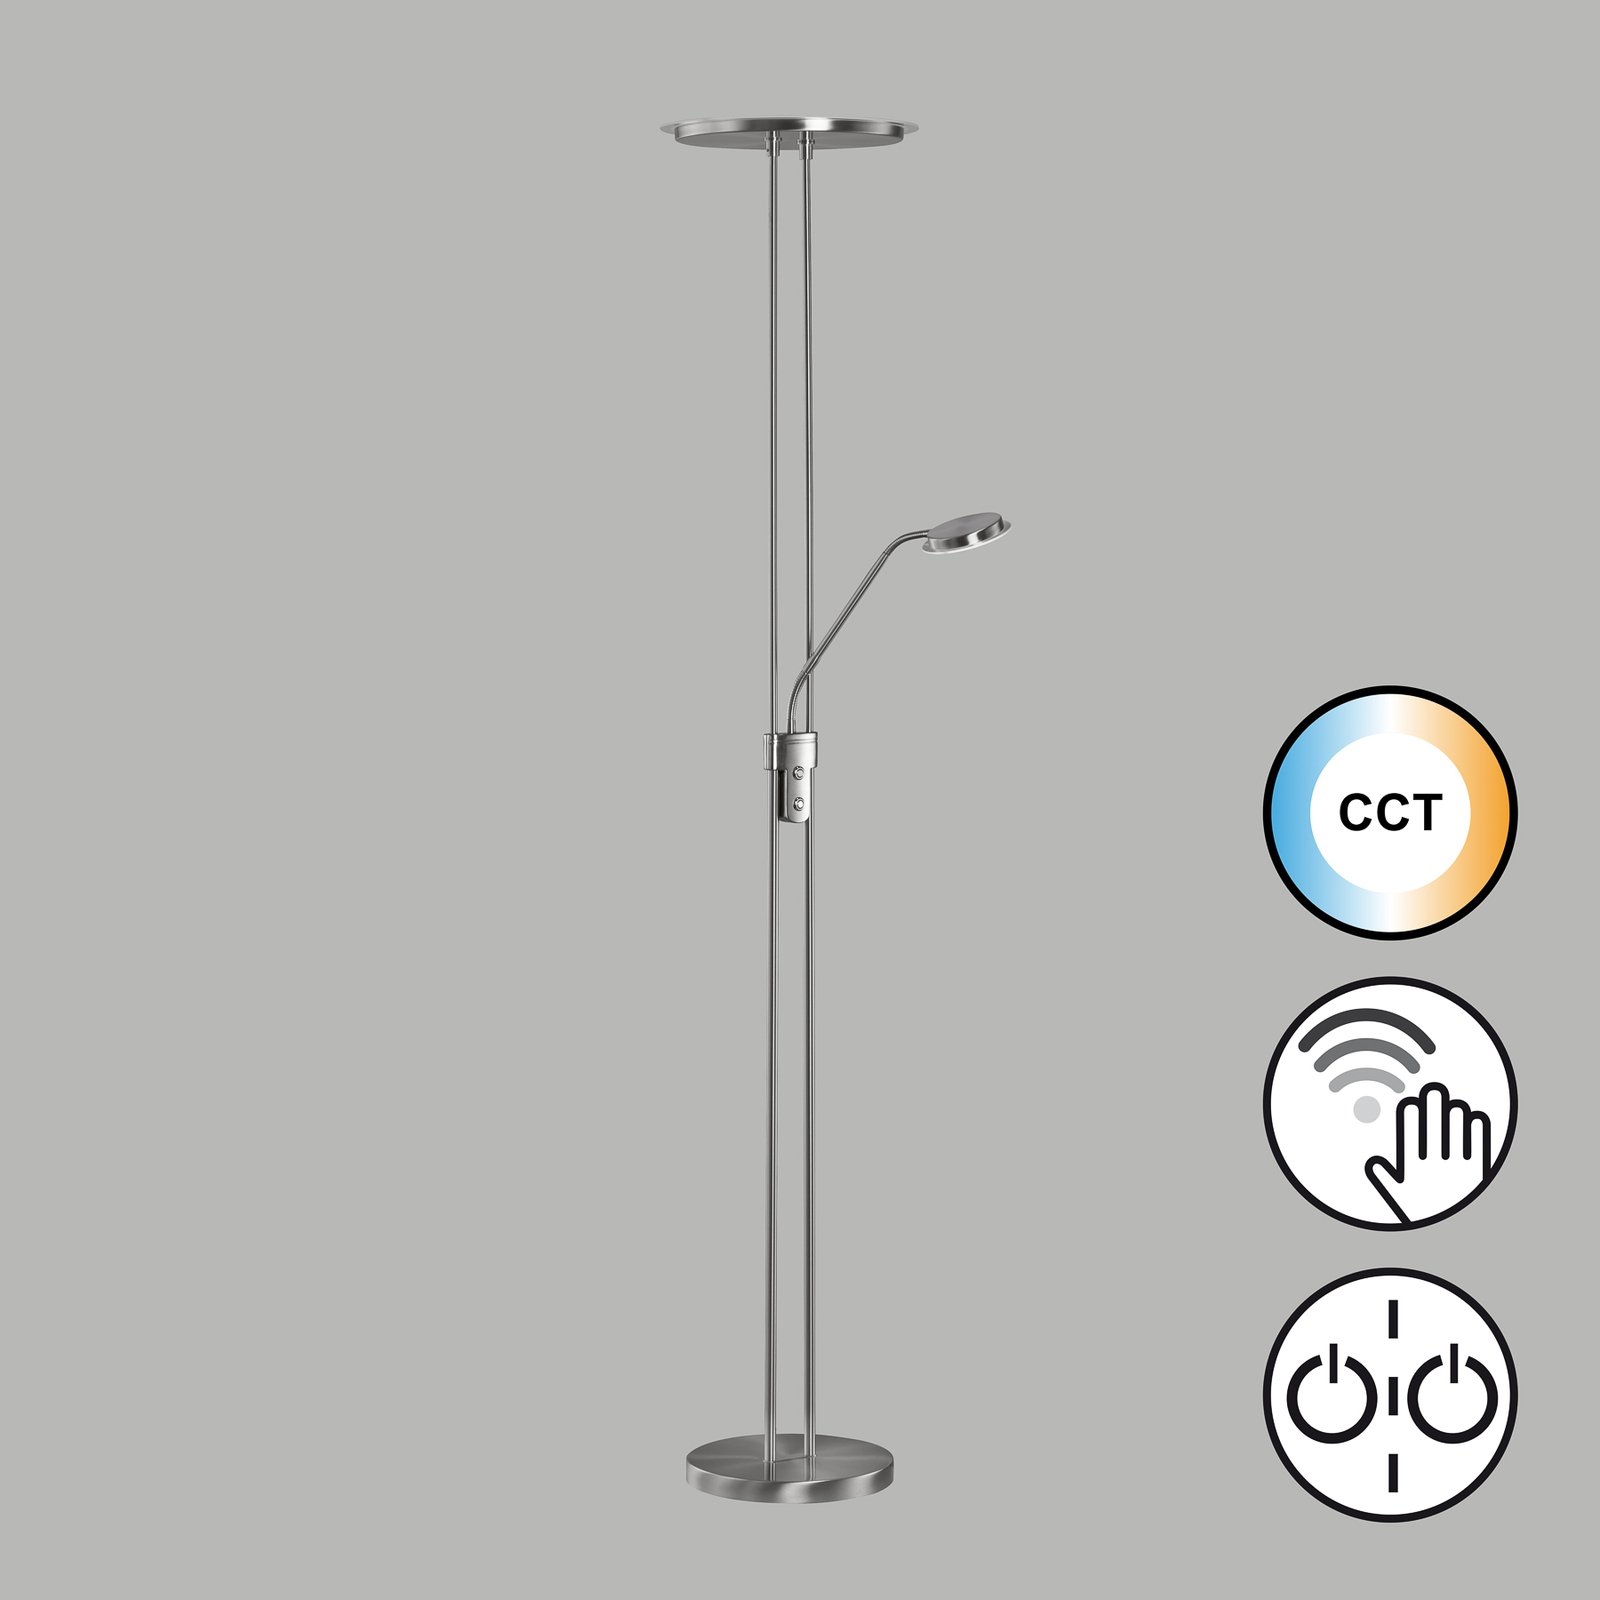 LED-Stehlampe Driva, nickelfarben, Höhe 182, 2-flg., CCT